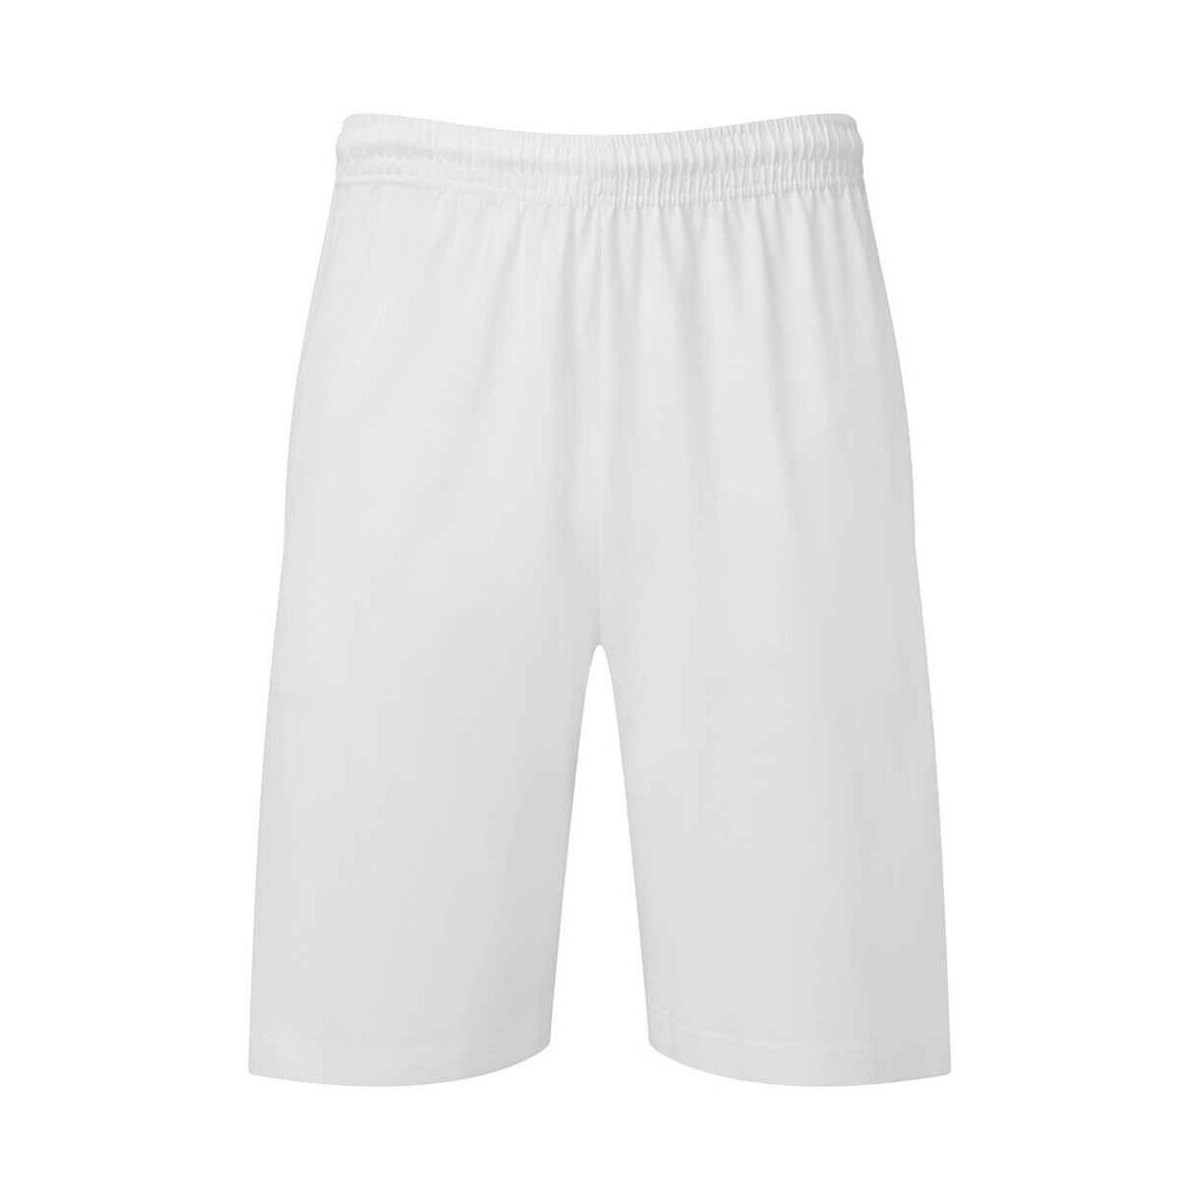 textil Shorts / Bermudas Fruit Of The Loom Iconic 195 Blanco